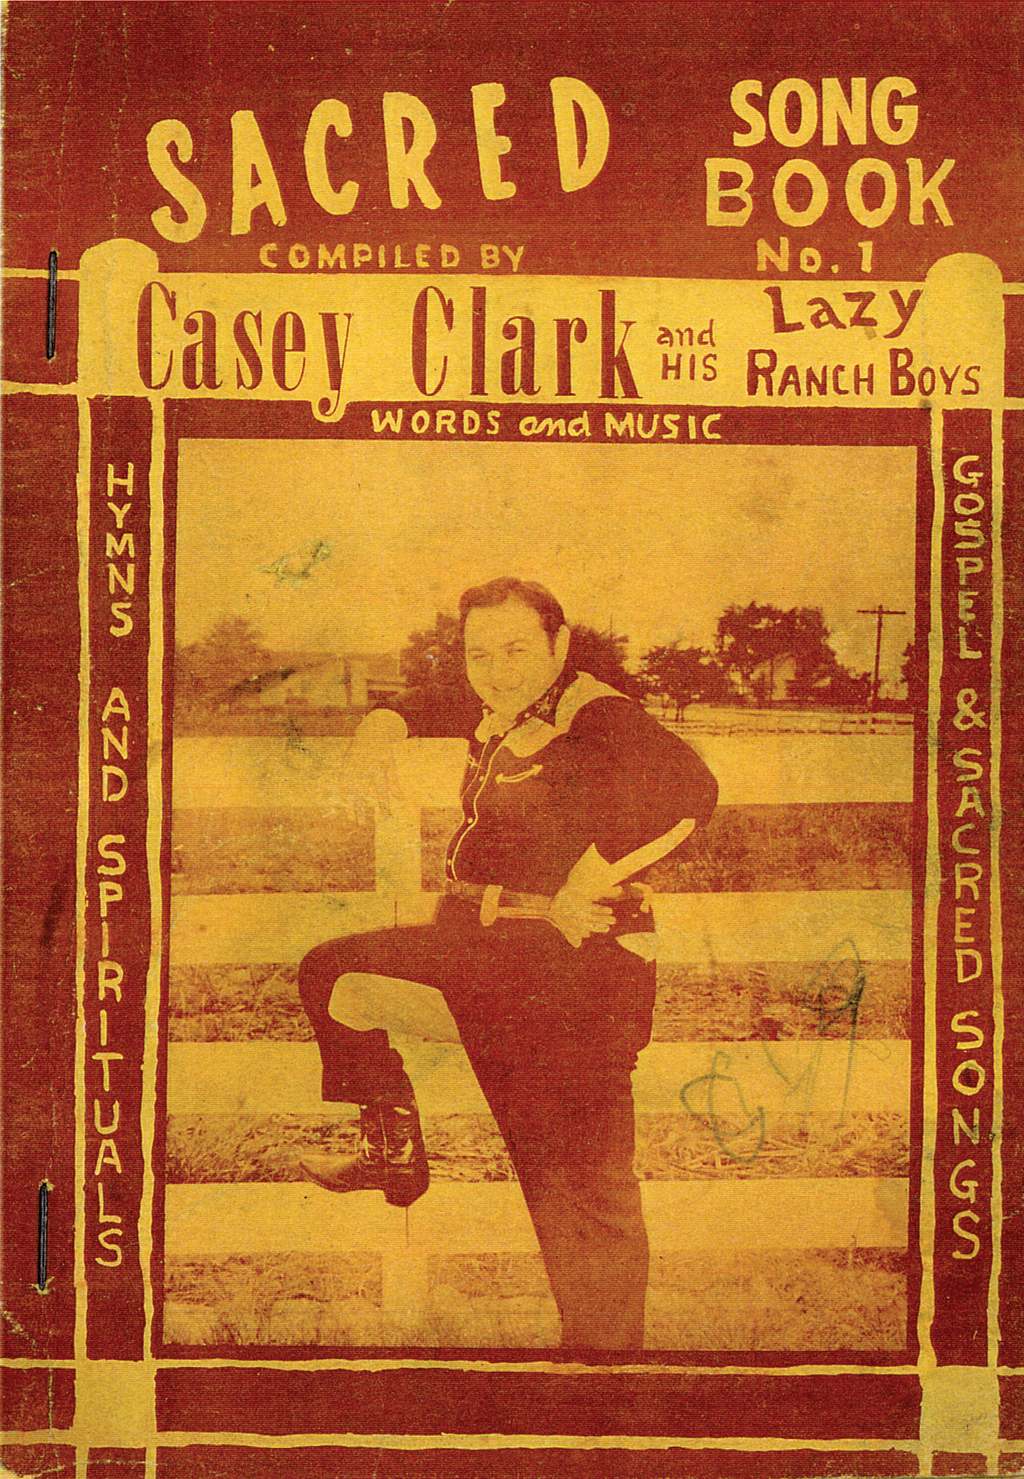 Casey Clark and Lazy Ranch Boys book, 1950